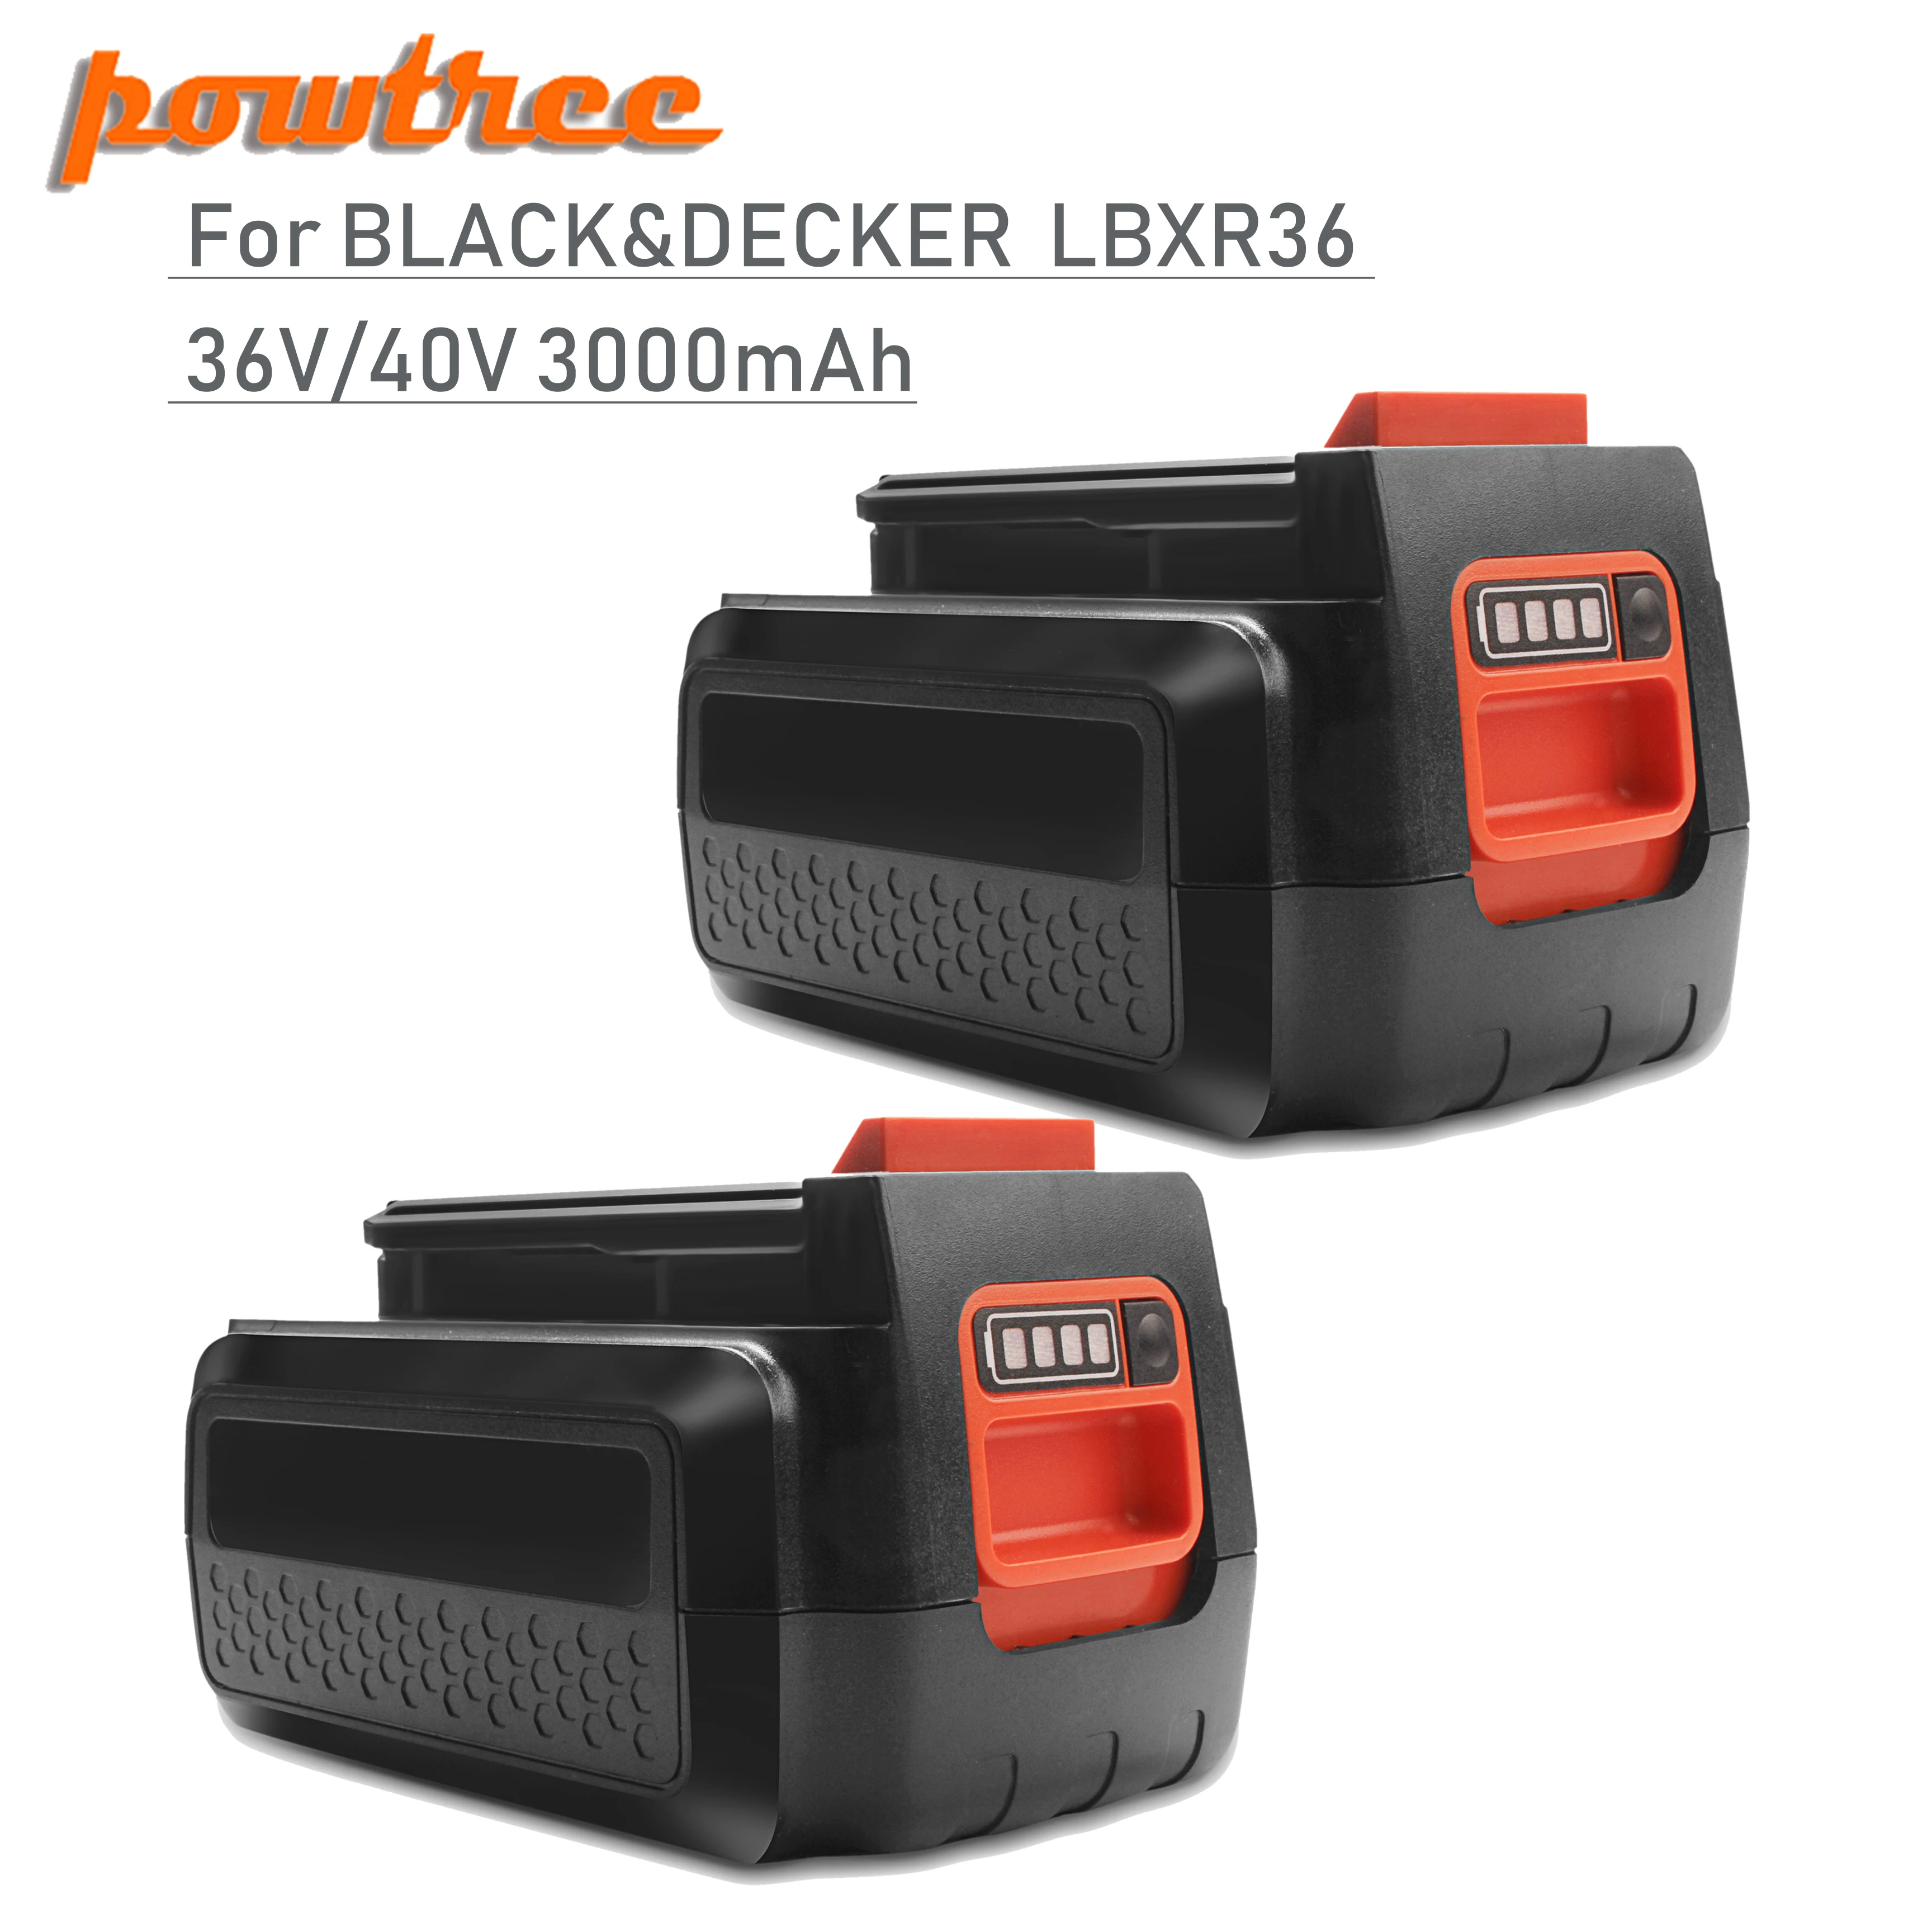 

Powtree 3.0Ah 36V/40V LBX36 Rechargeable Battery For Black&Decker LBXR36 BXR36 LST136 LST420 LST220 LST300 MTC220 MST1024 L30